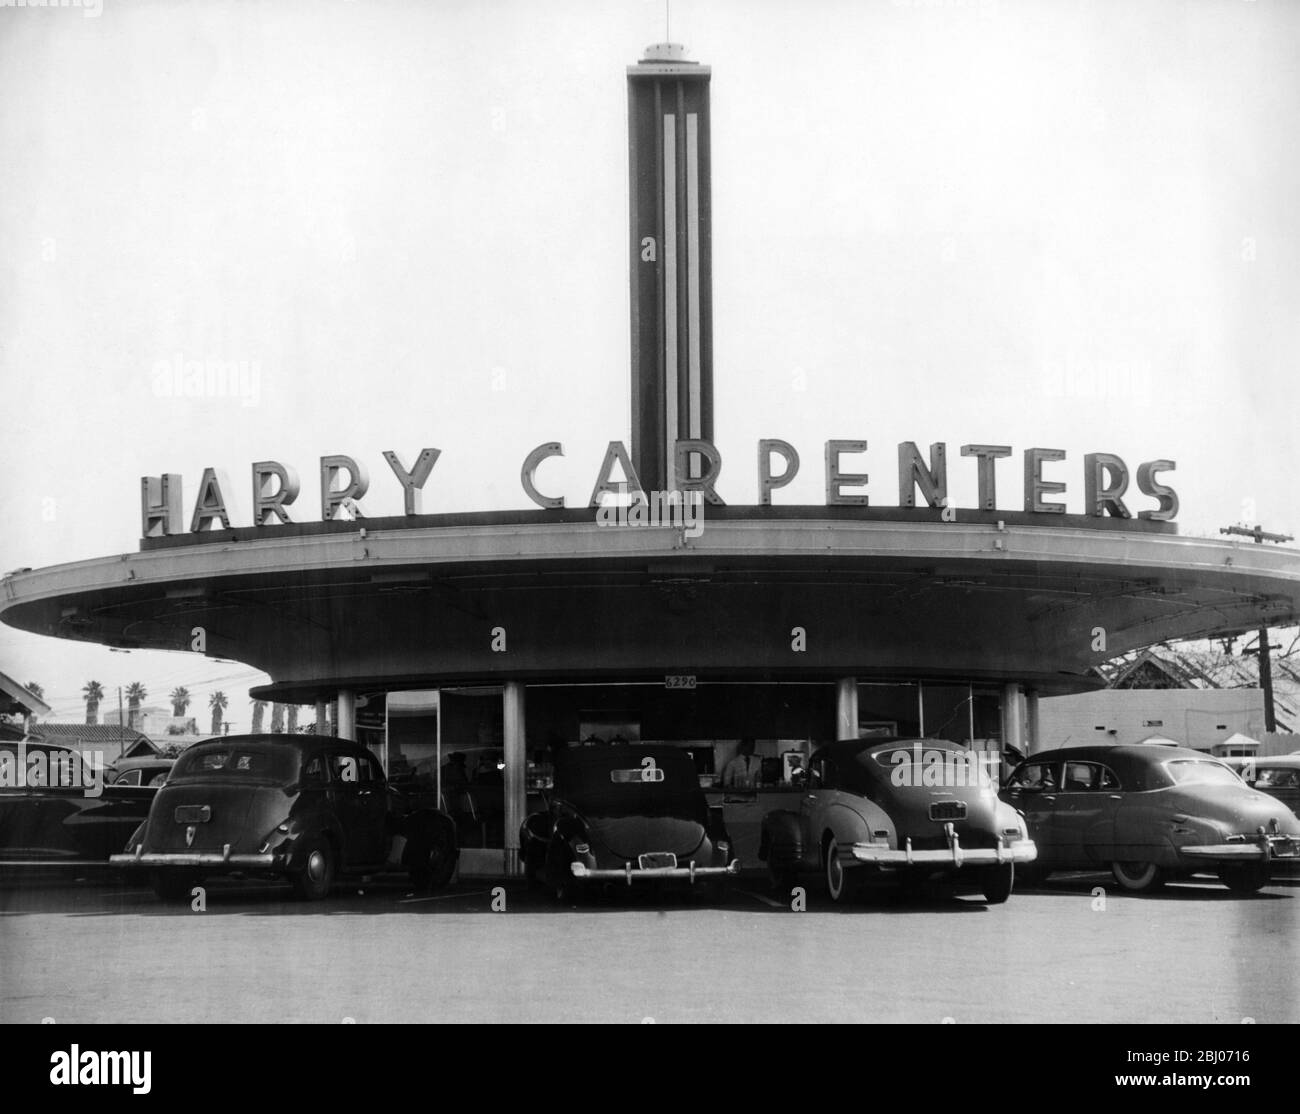 All'angolo tra Sunshine Boulevard e Vine Street di Hollywood, stand Harry Carpenters Drive-in Foto Stock